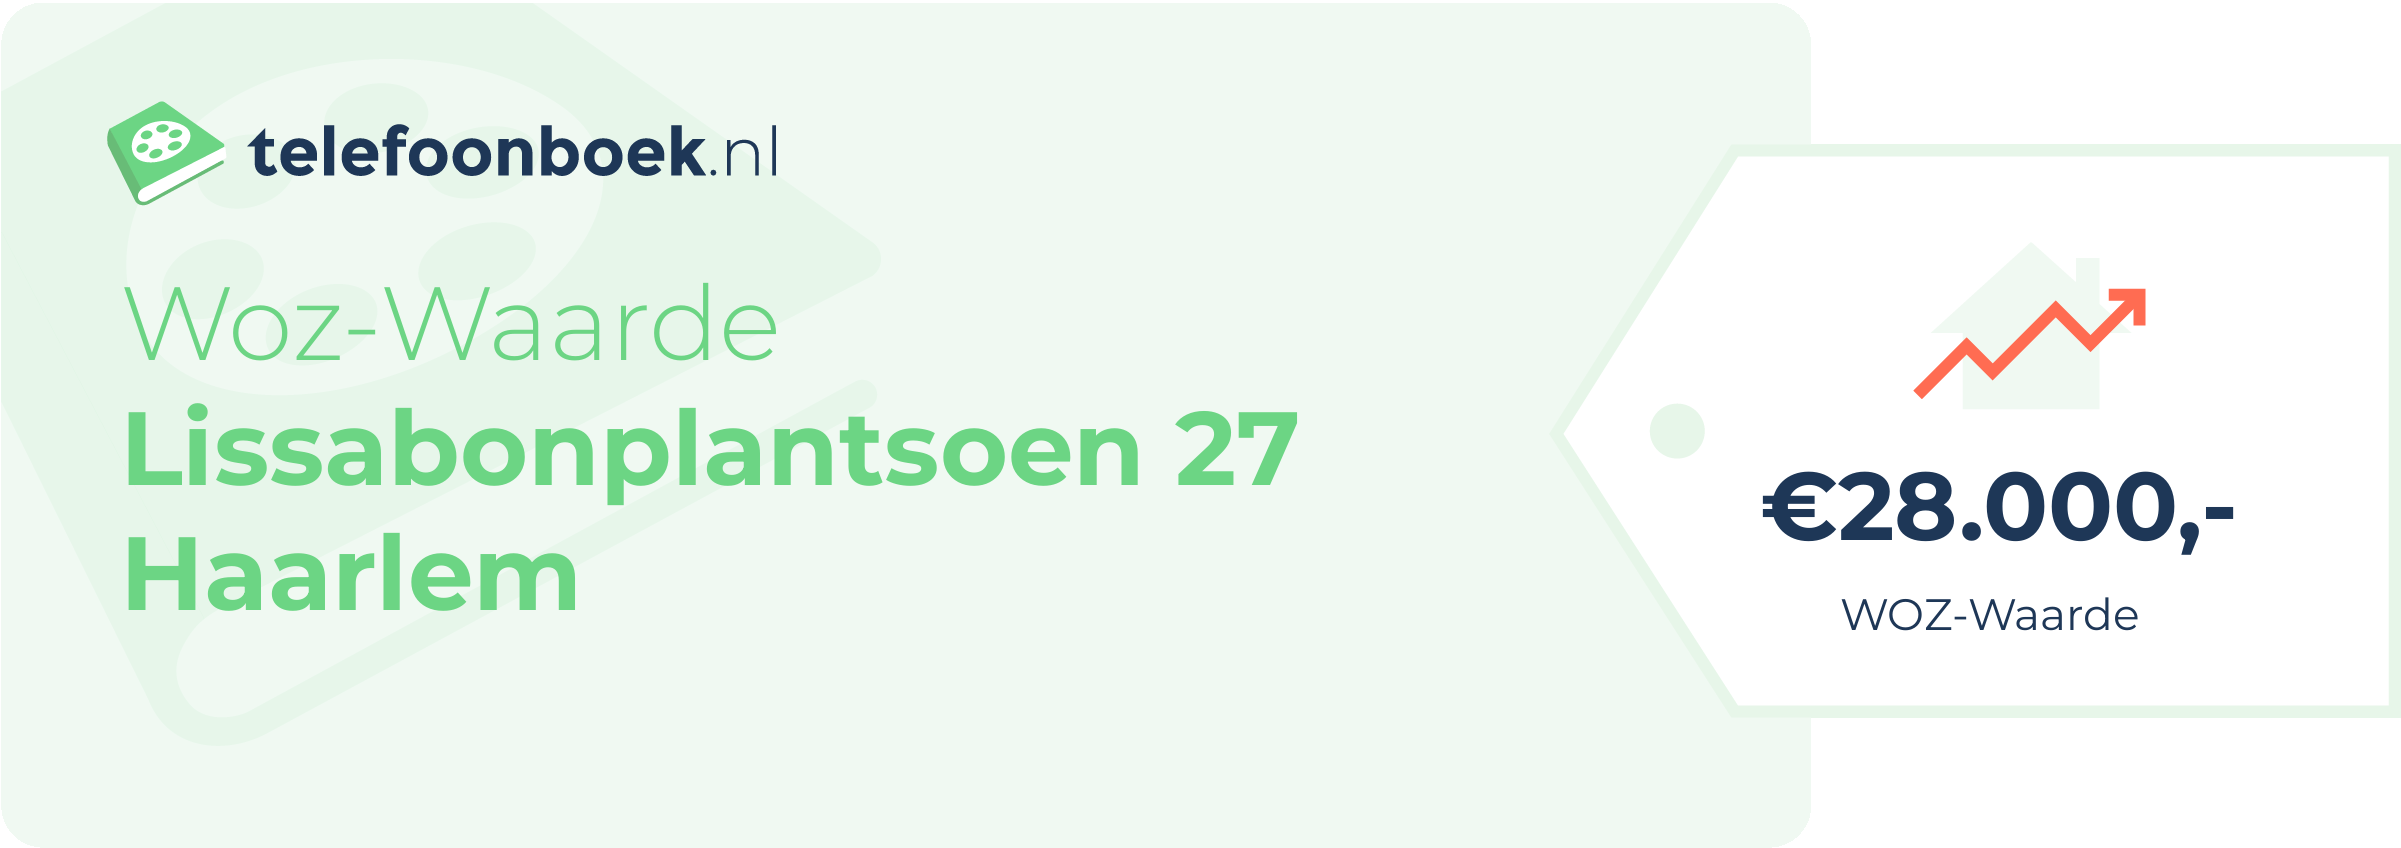 WOZ-waarde Lissabonplantsoen 27 Haarlem